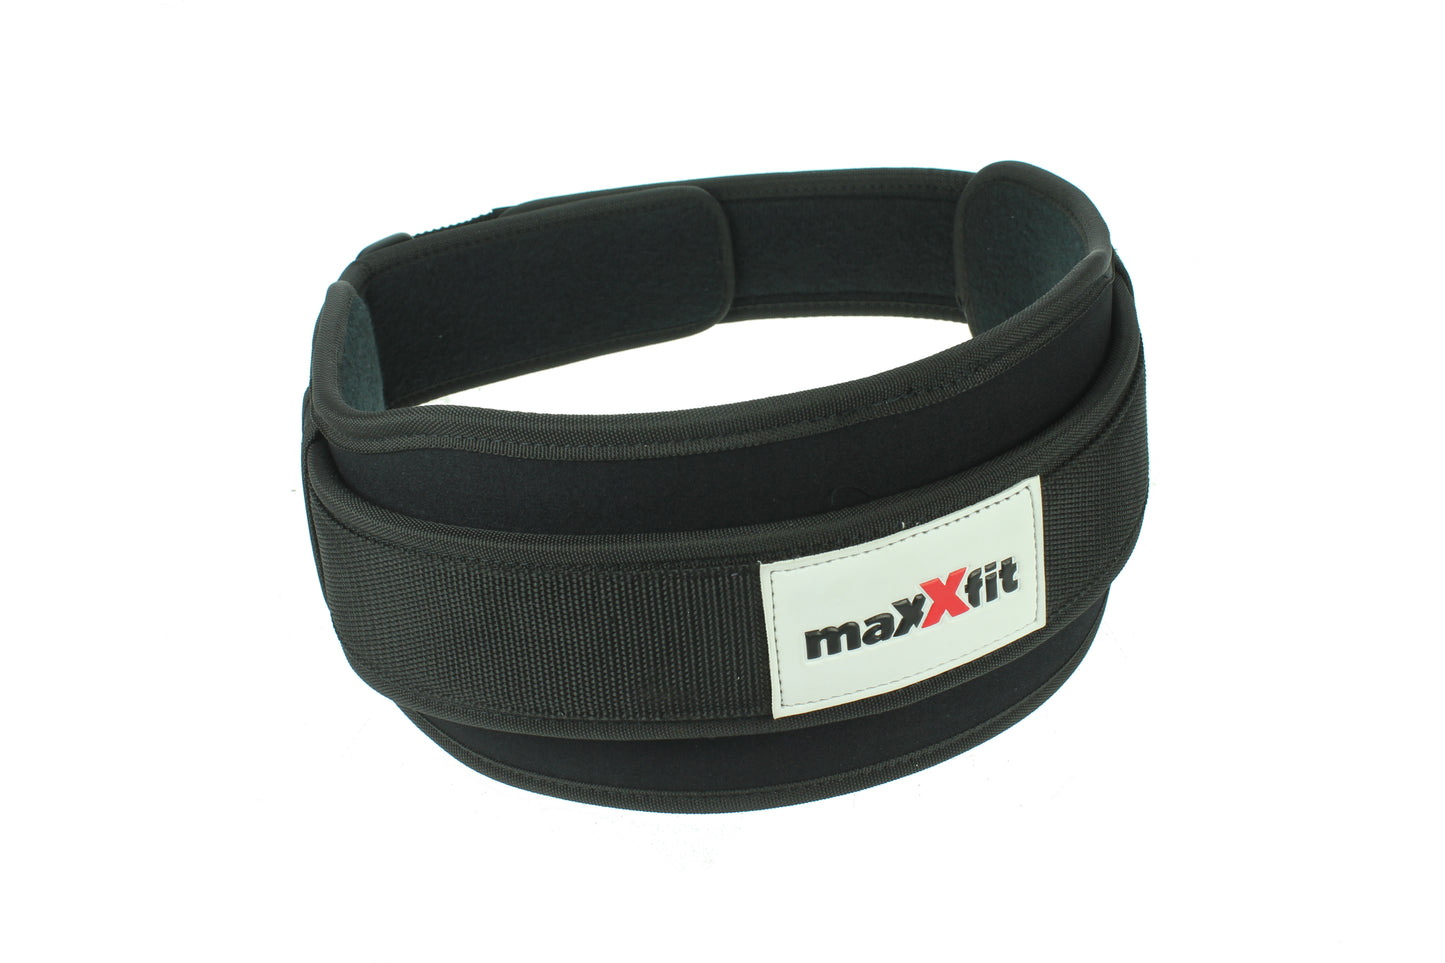 Maxxfit Neoprene Weight Lifting Belt Gym Training Back Support